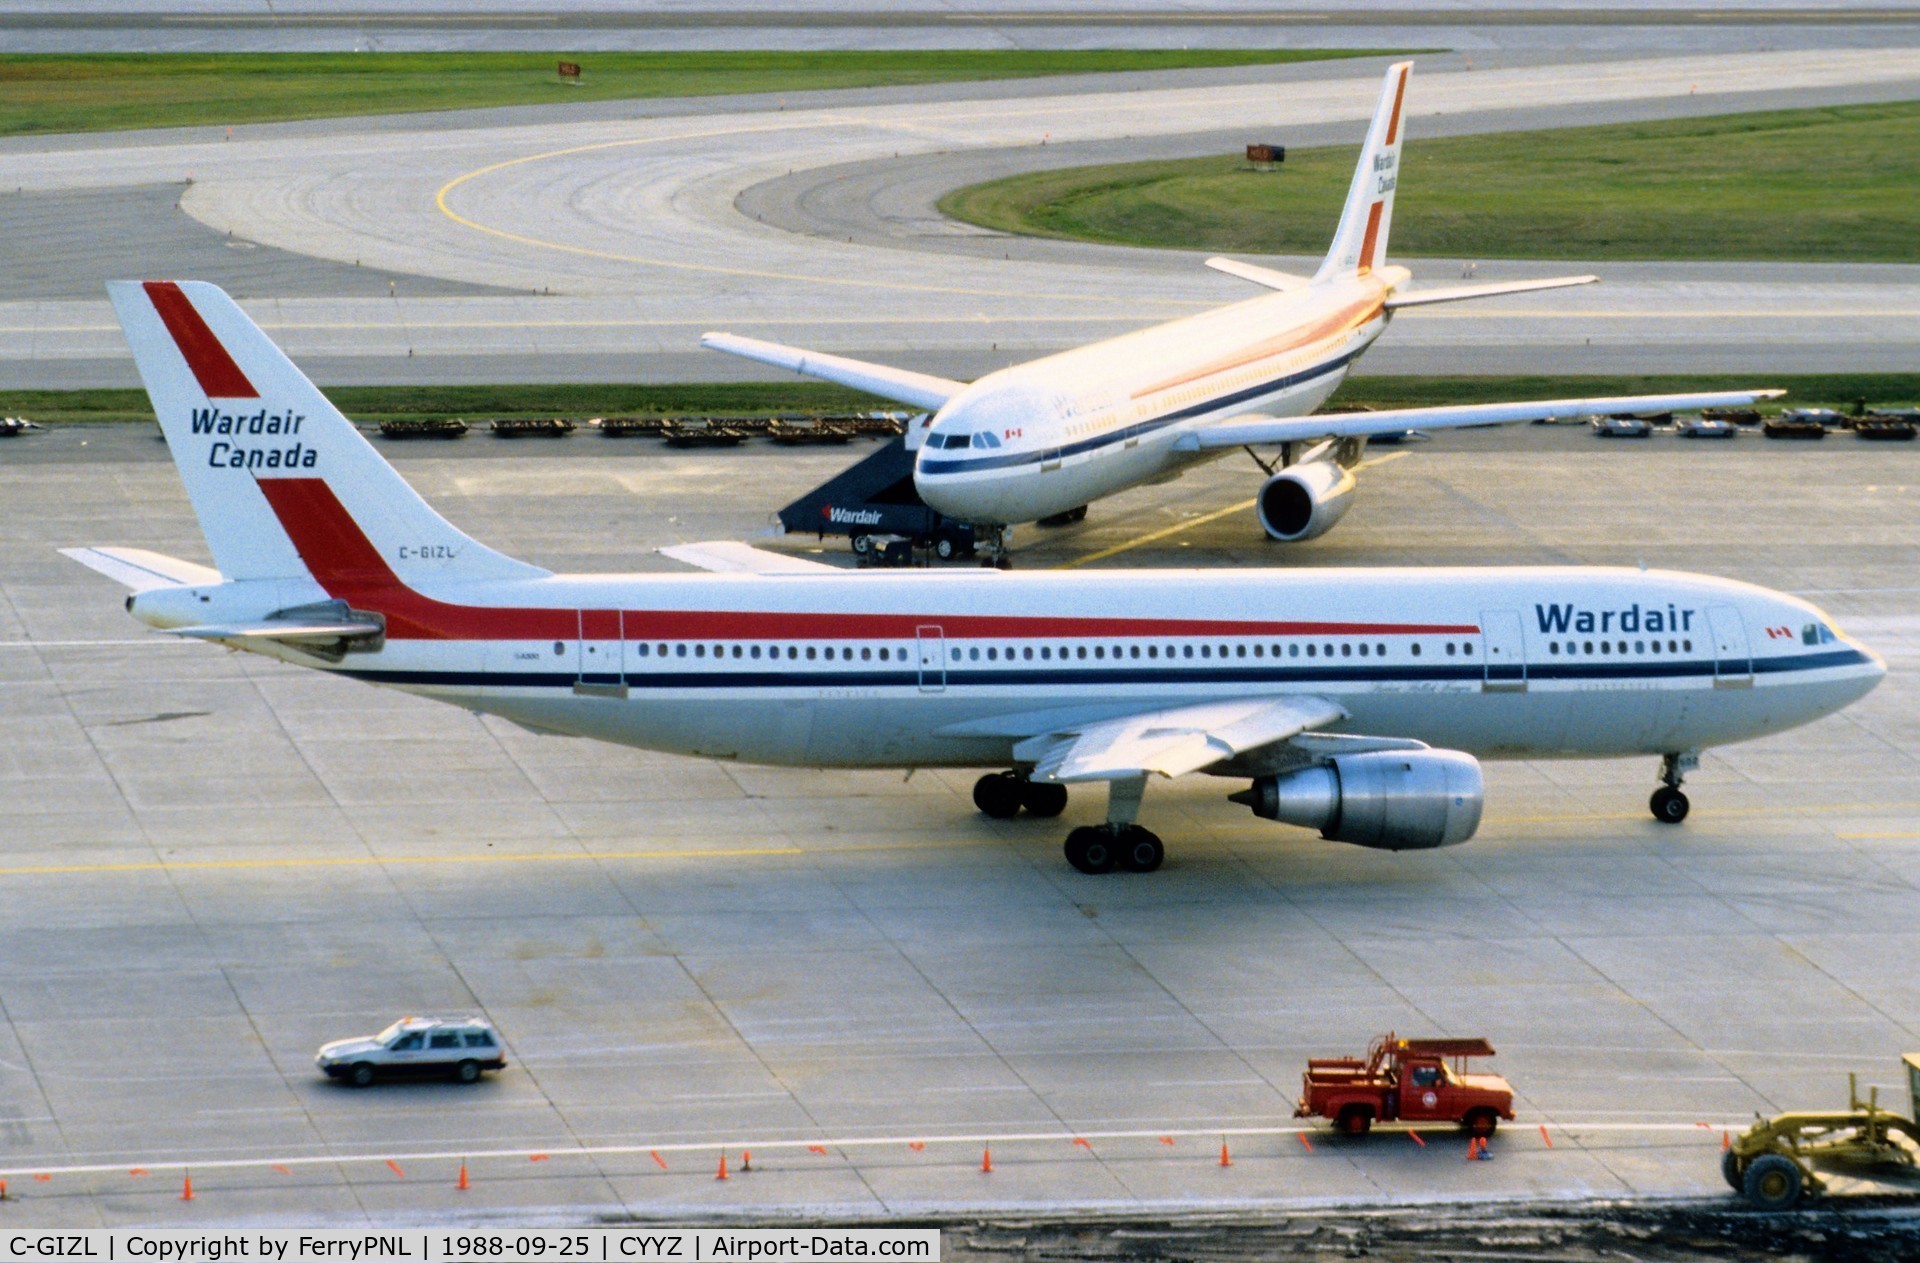 C-GIZL, 1982 Airbus A300B4-203 C/N 192, Wardair A300, 2 in one frame